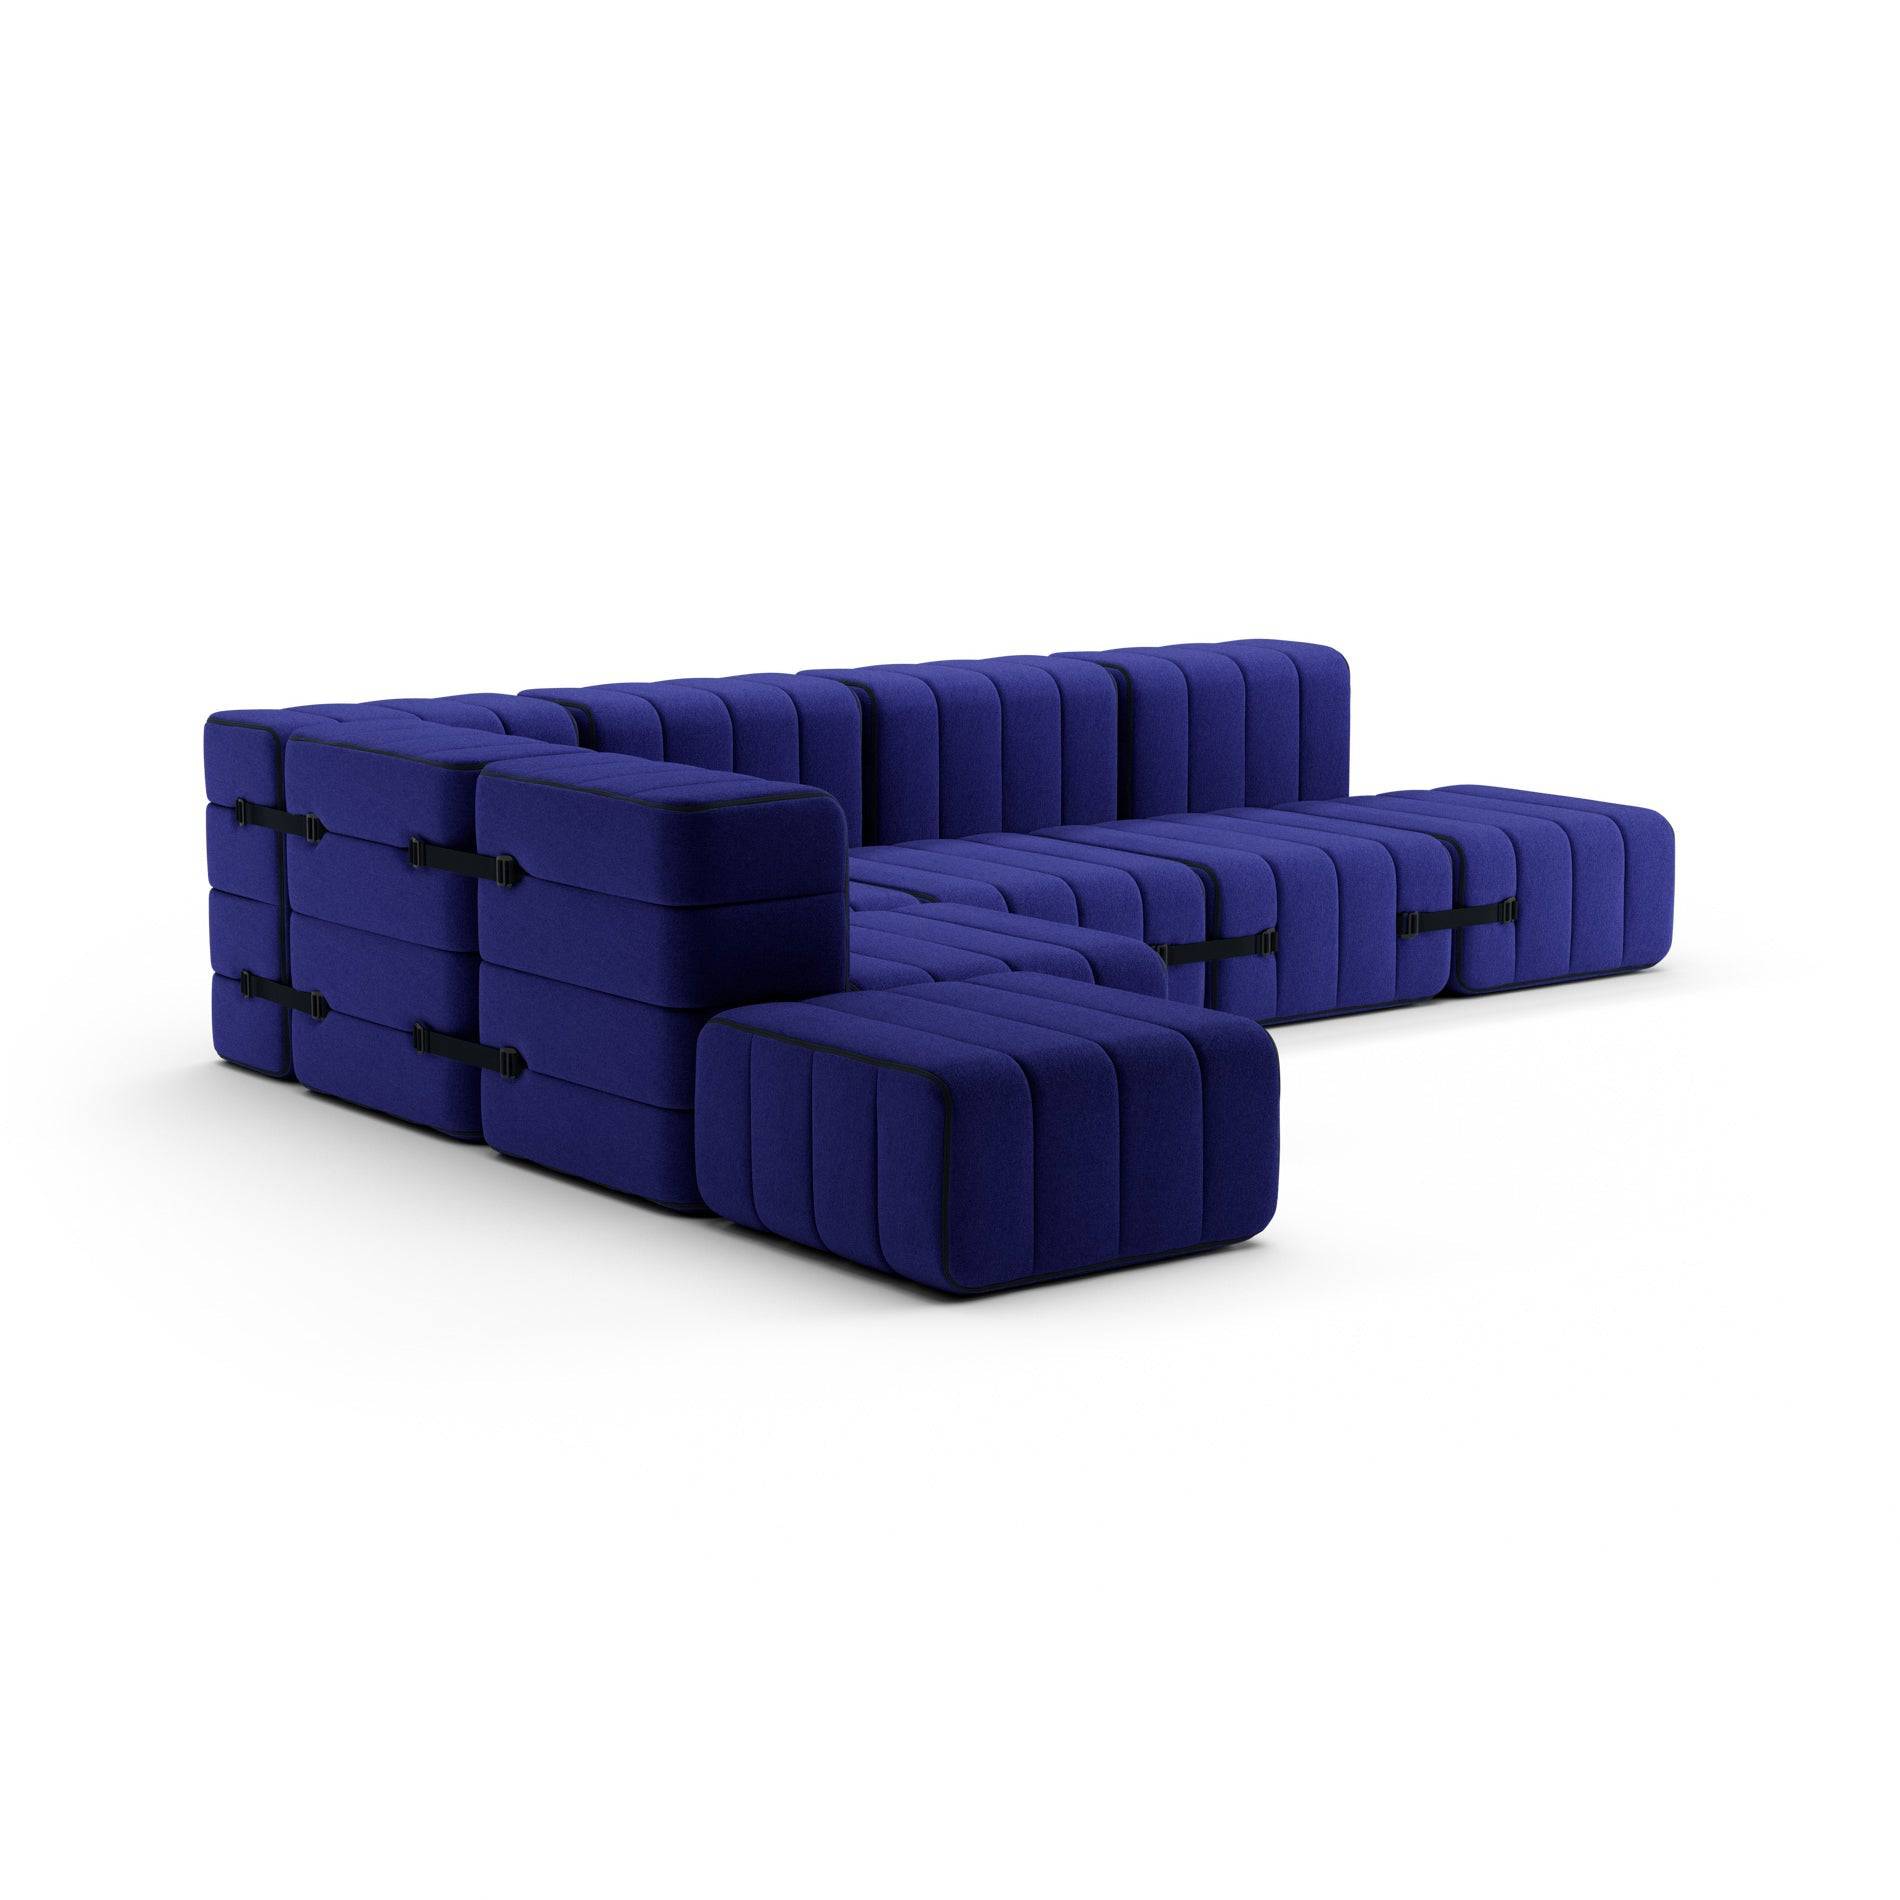 Curt Sofa System - Jet Blue Violett - THAT COOL LIVING